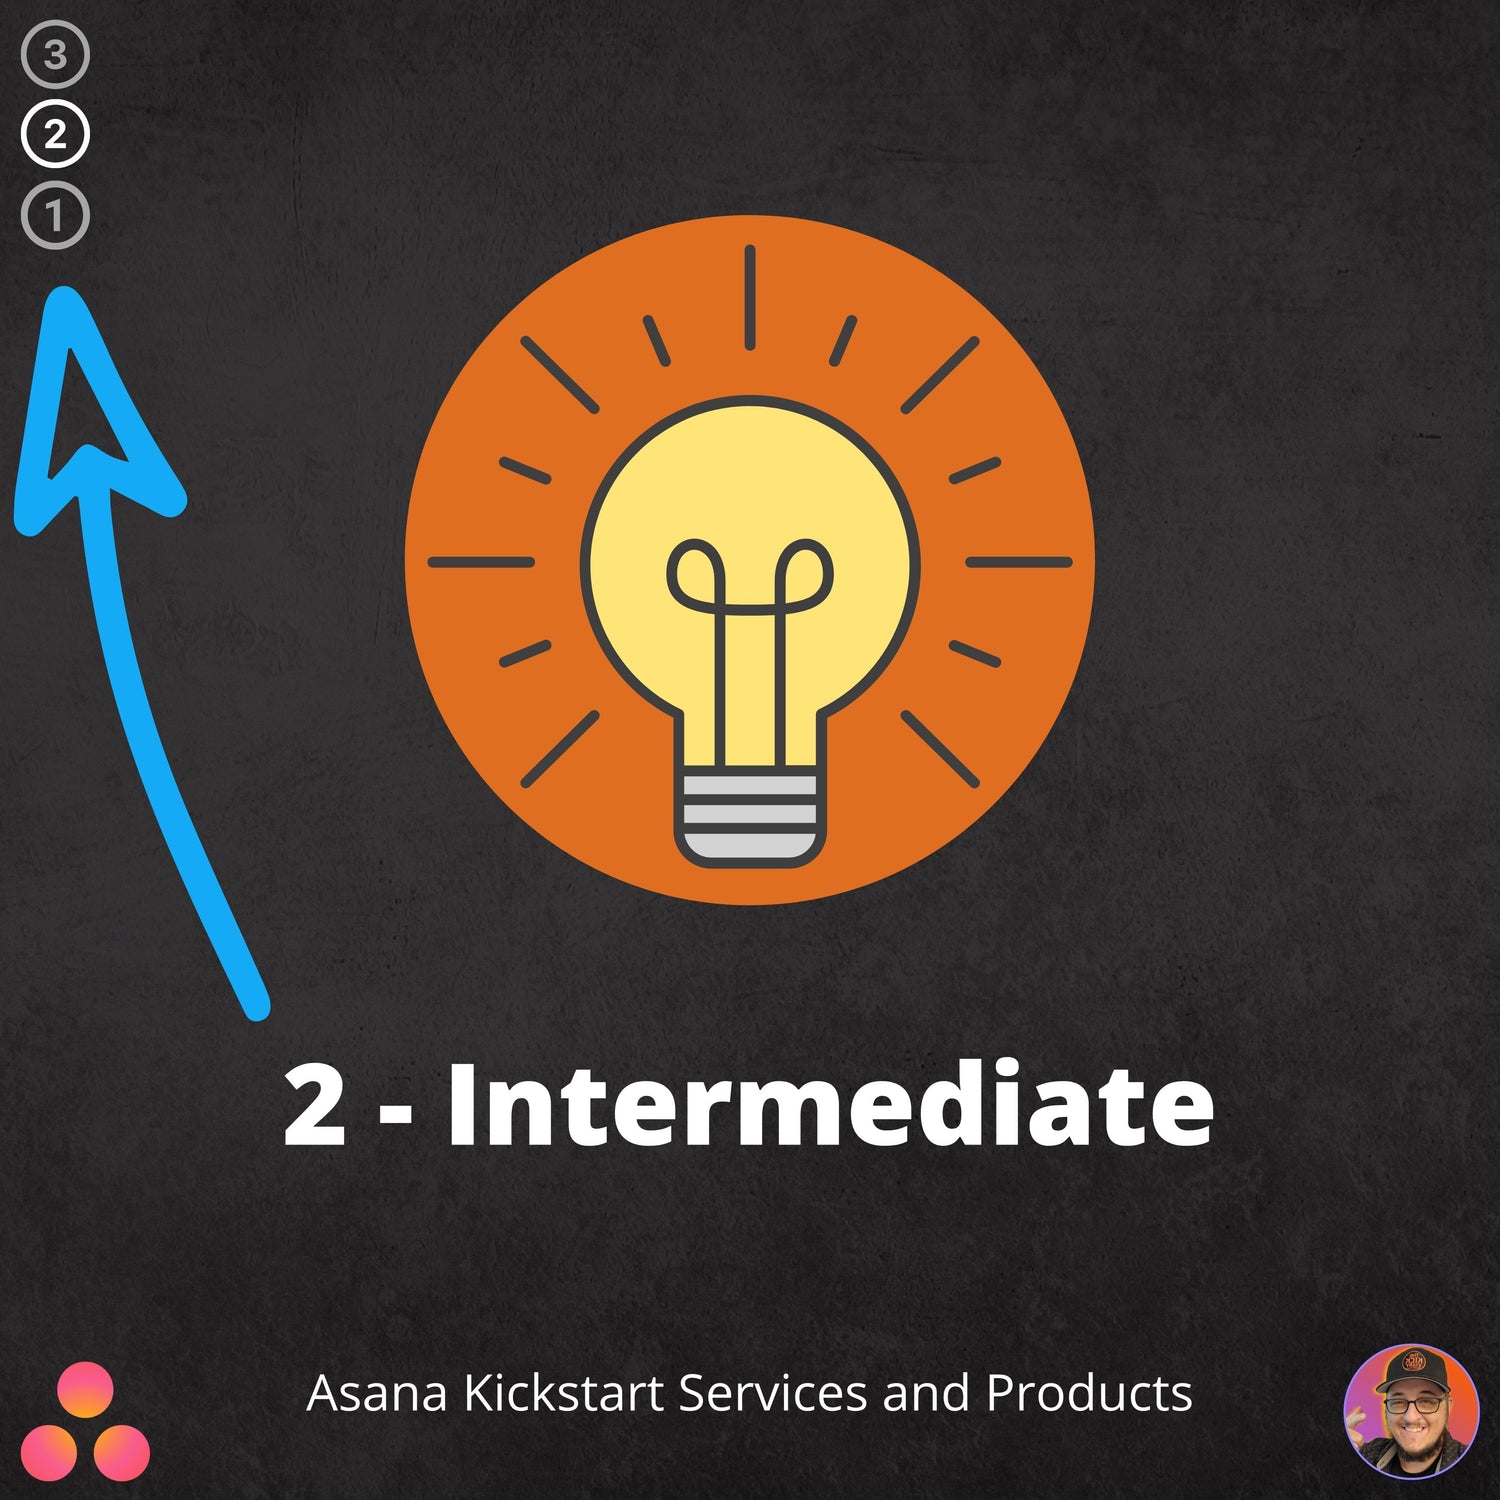 Asana Kickstart - (2) Intermediate